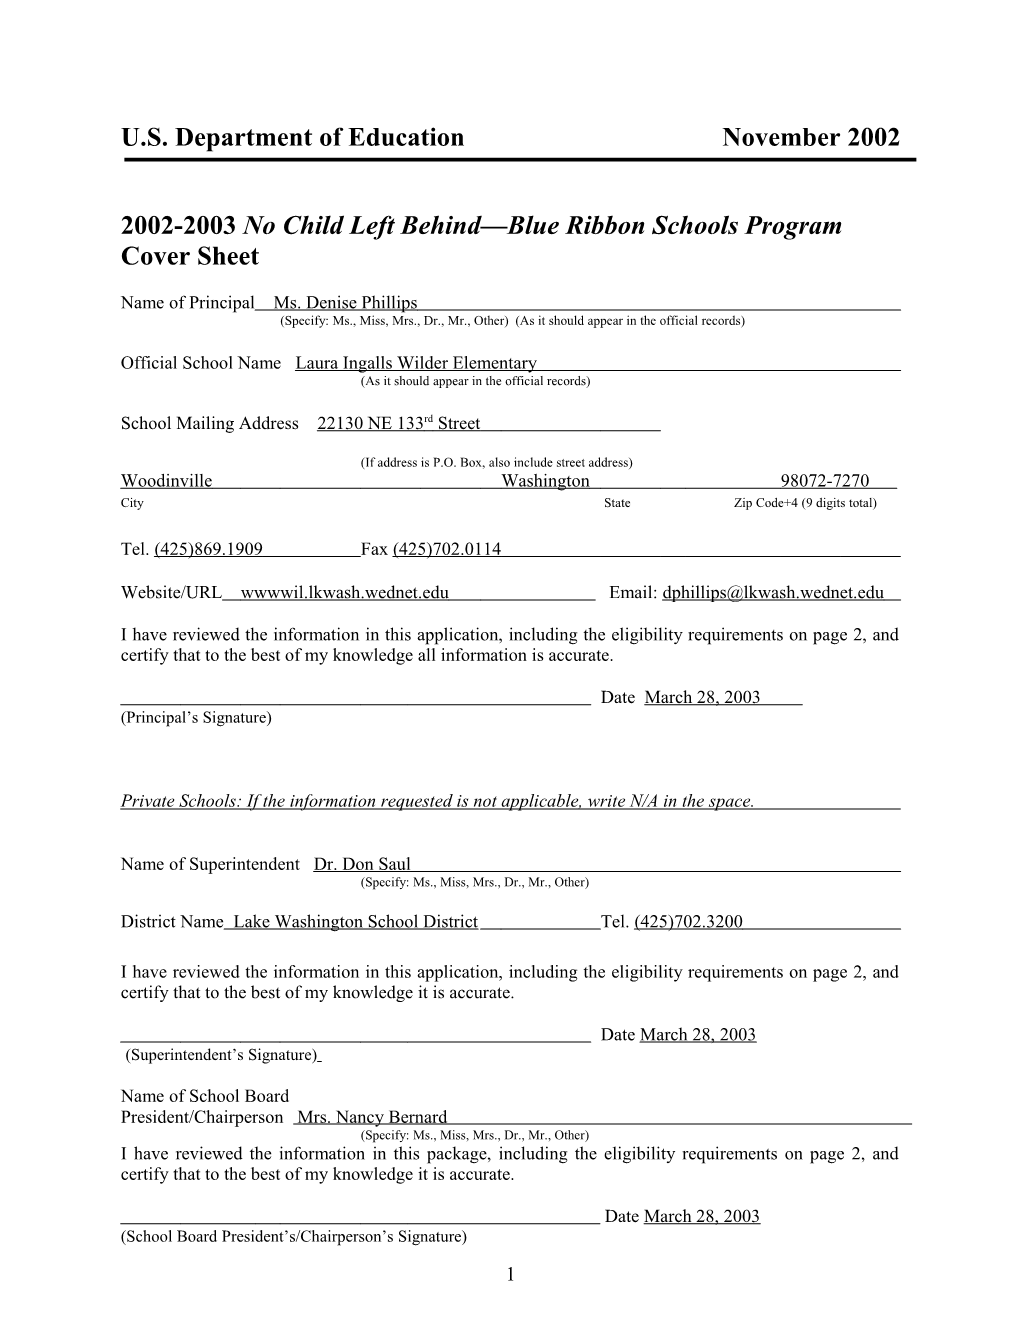 Laura Ingalls Wilder Elementary School 2003 No Child Left Behind-Blue Ribbon School (Msword)